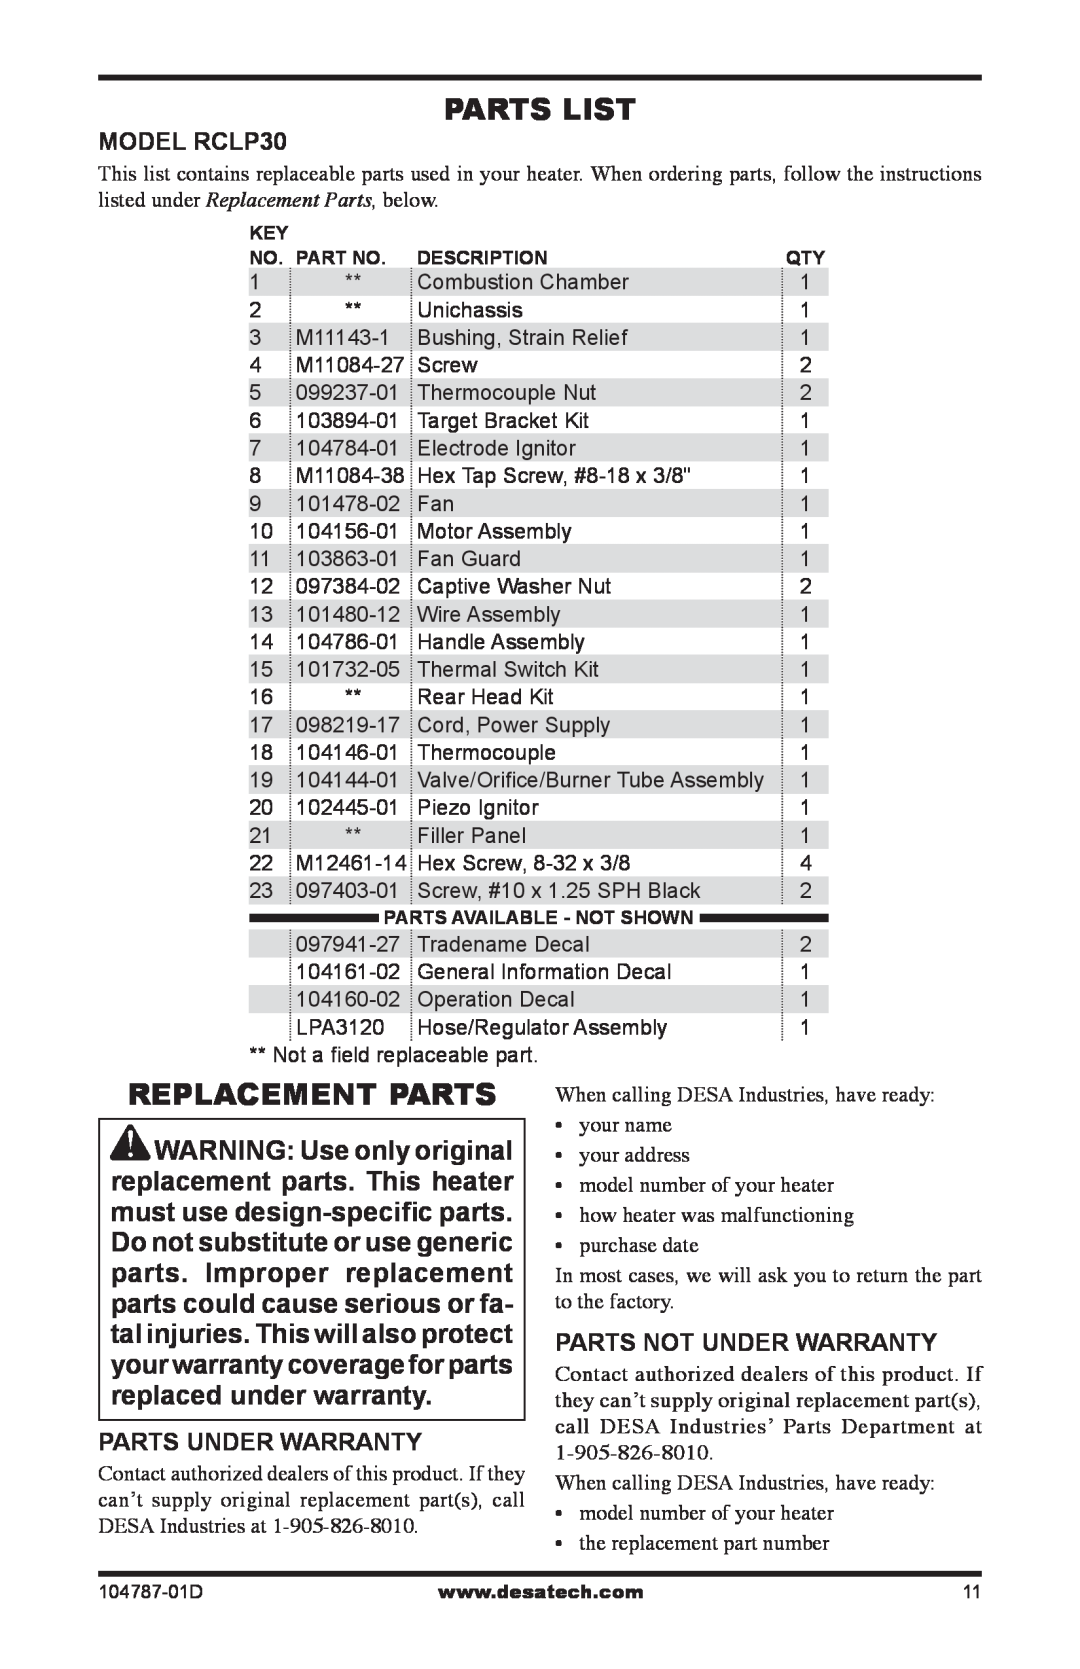 Desa owner manual Parts List, Replacement Parts, MODEL RCLP30, Parts Under Warranty, Parts Not Under Warranty 